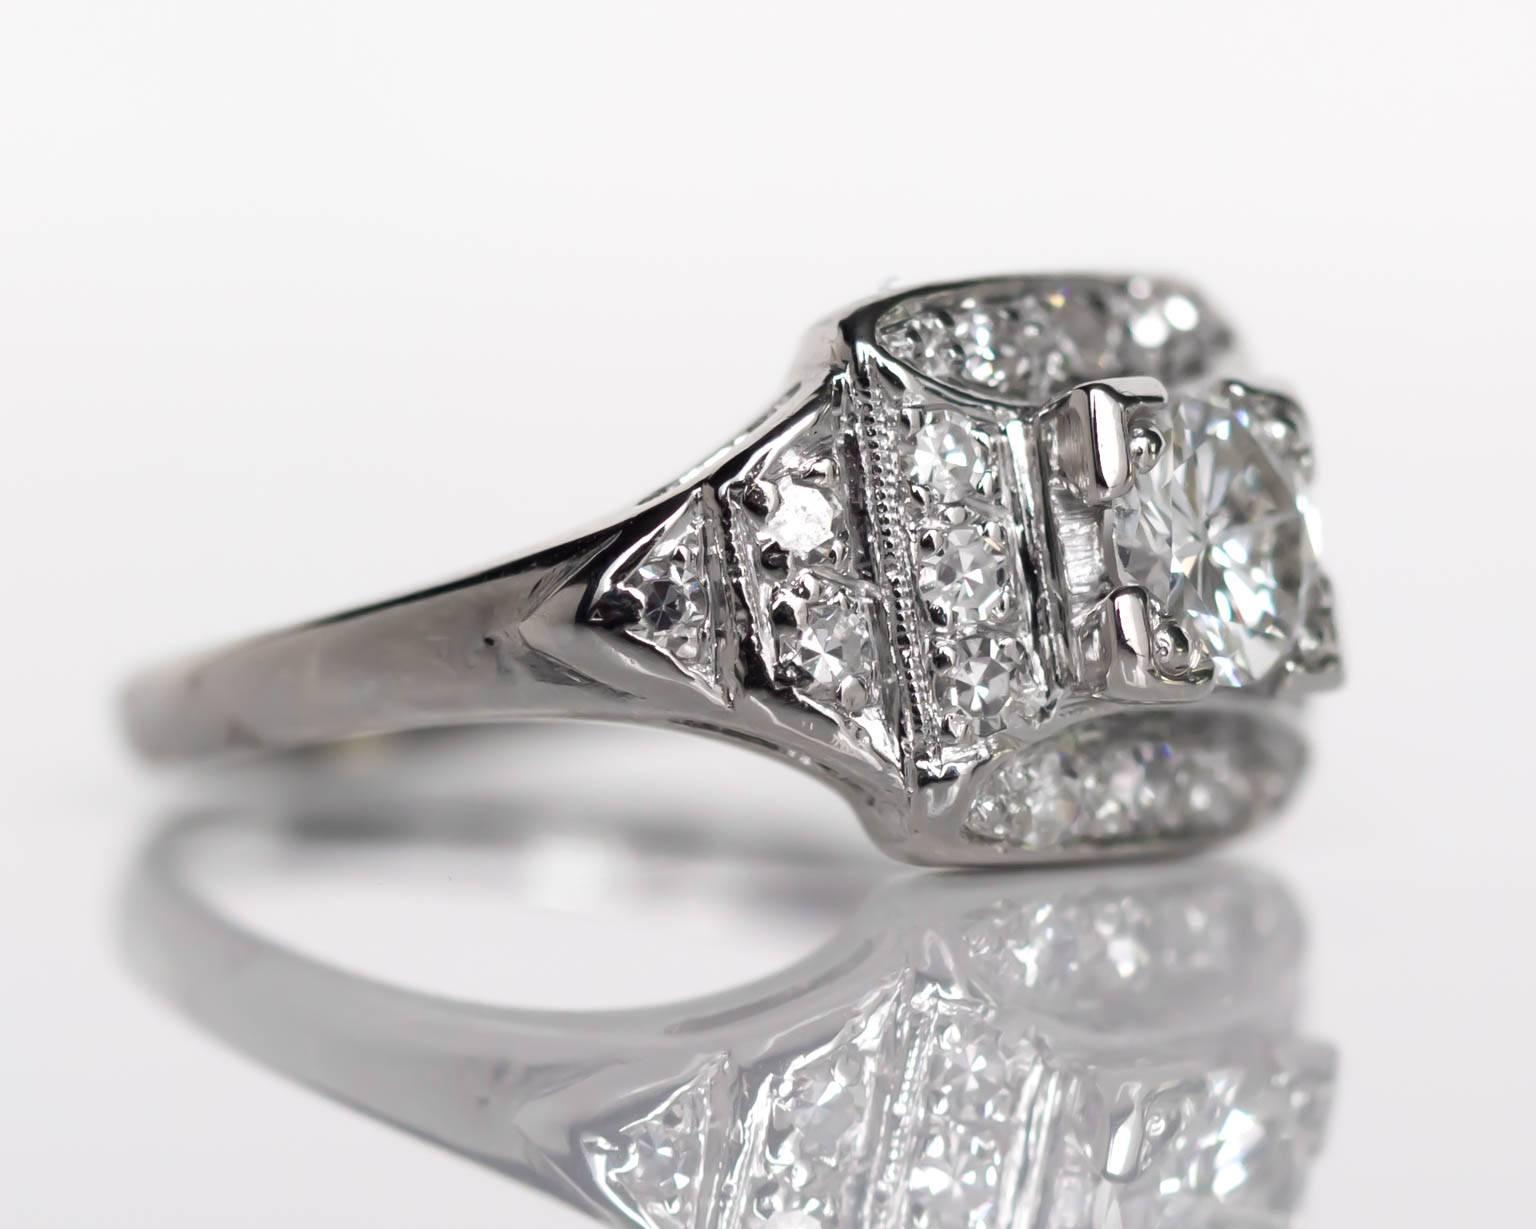 42 carat diamond ring